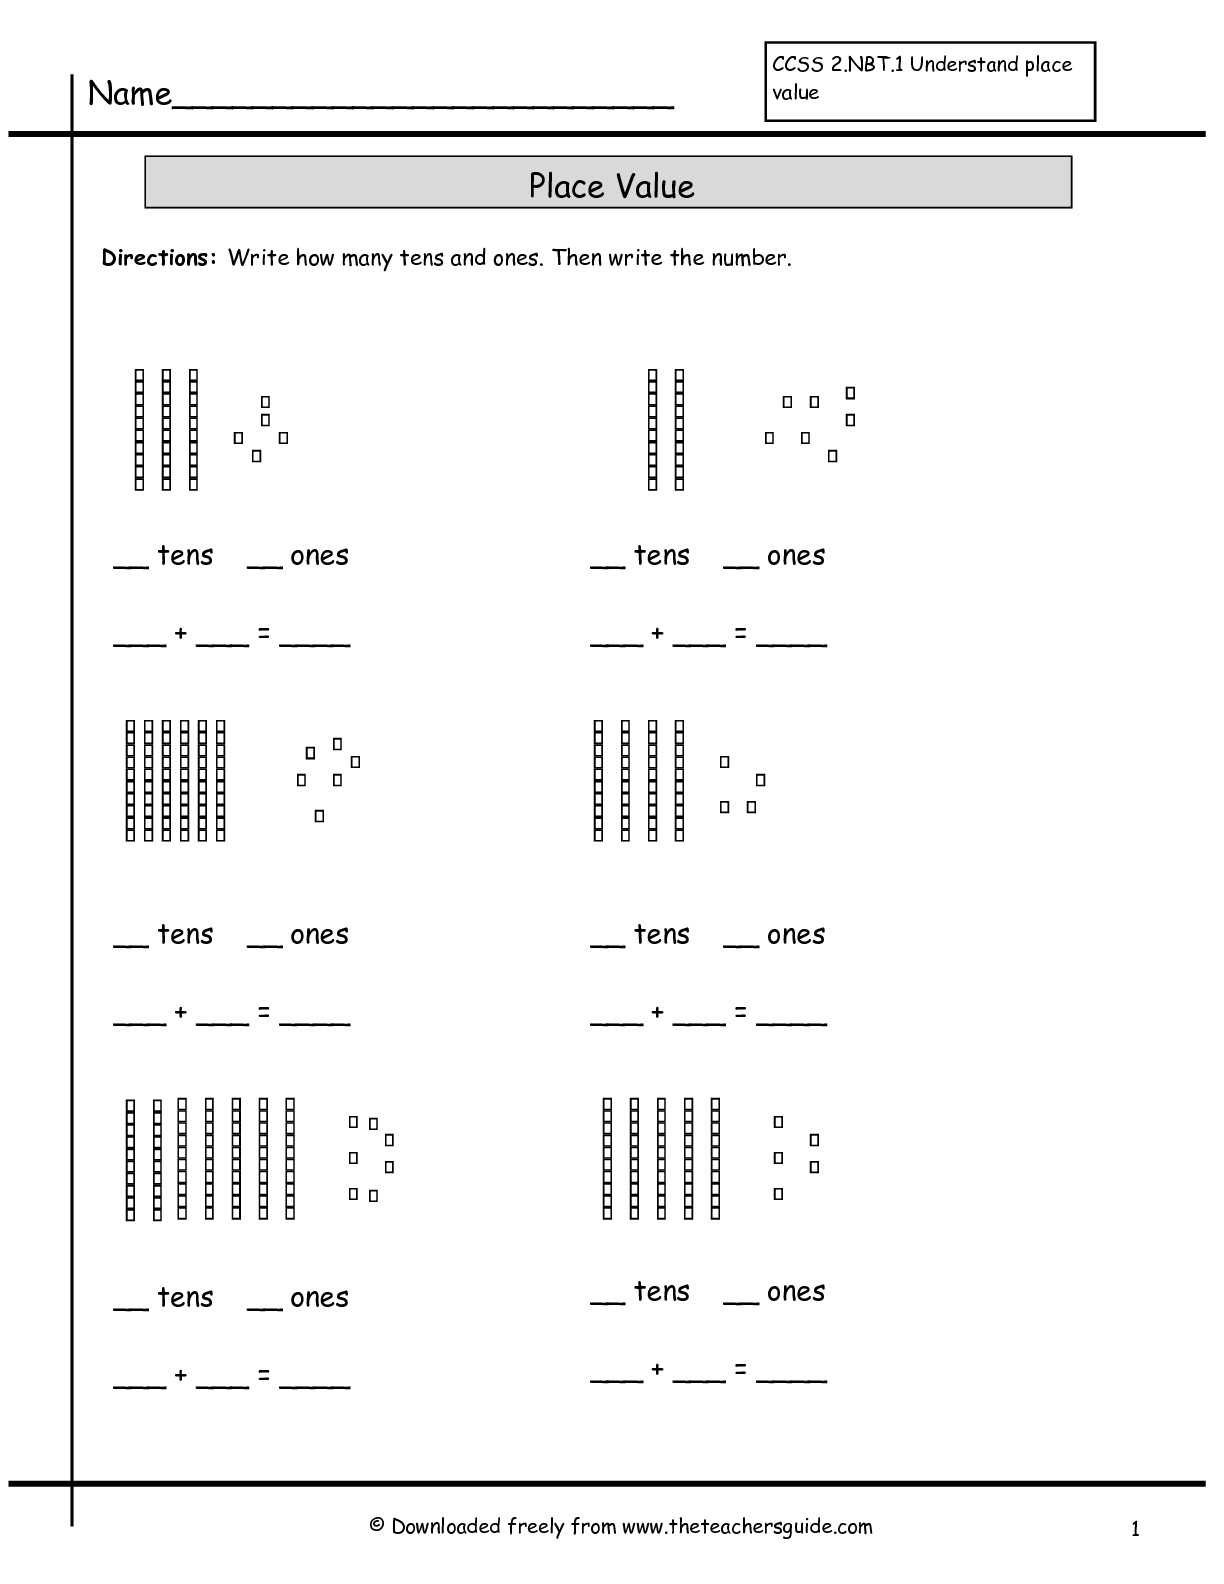 Place Value Worksheets for Kindergarten Also Place Value Worksheets Multiple the Best Worksheets Image Collection